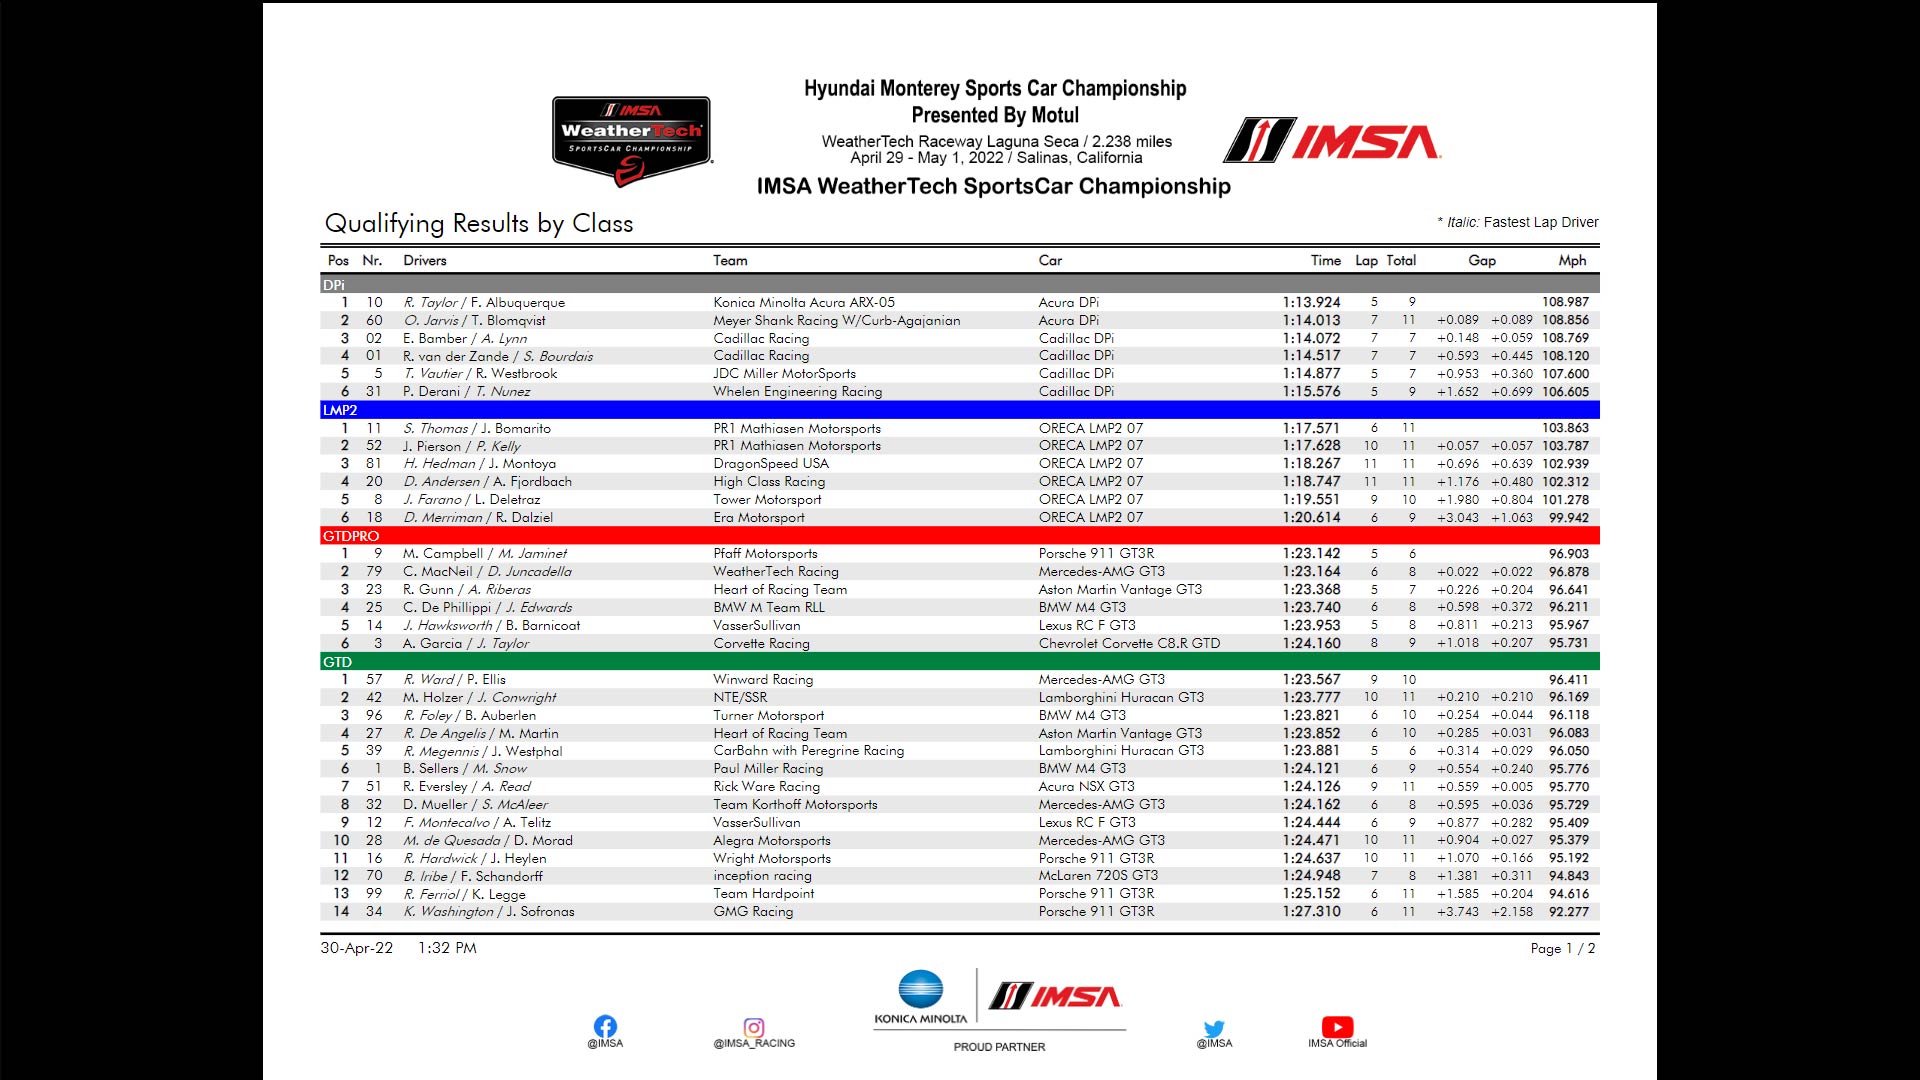 Qualifying Results for the Hyundai Monterey Sports Car Championship at Laguna Seca